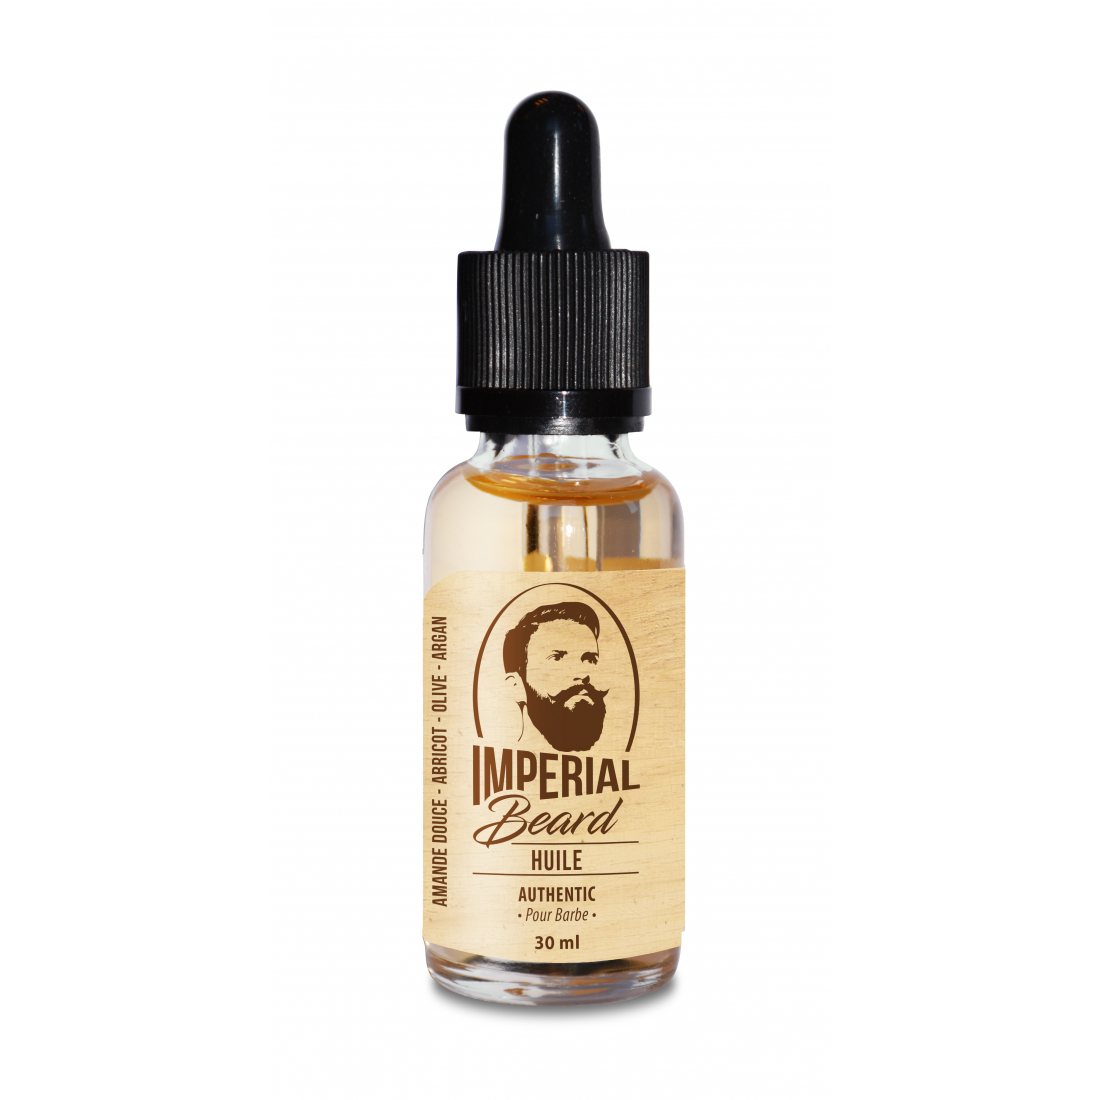 'Authentic' Beard Oil - 30 ml